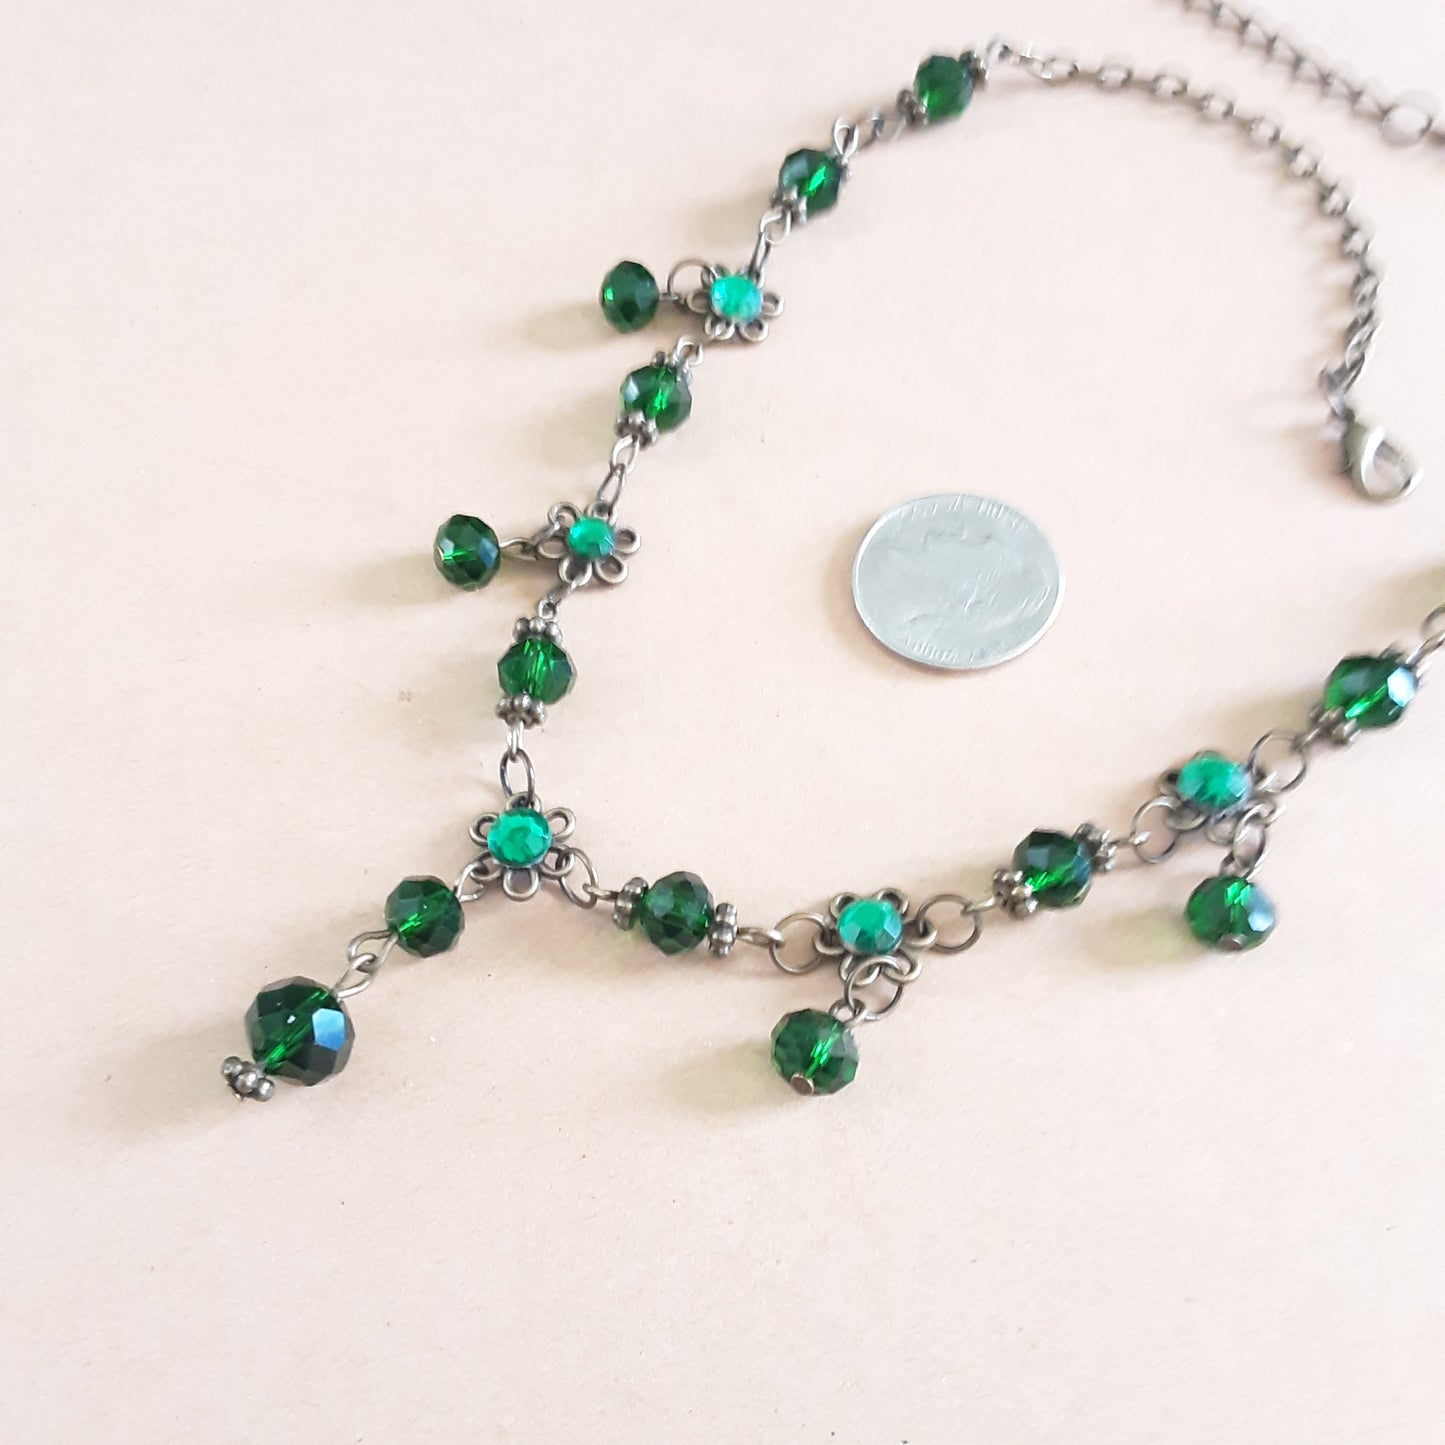 Brass and green rhinestone flower necklace